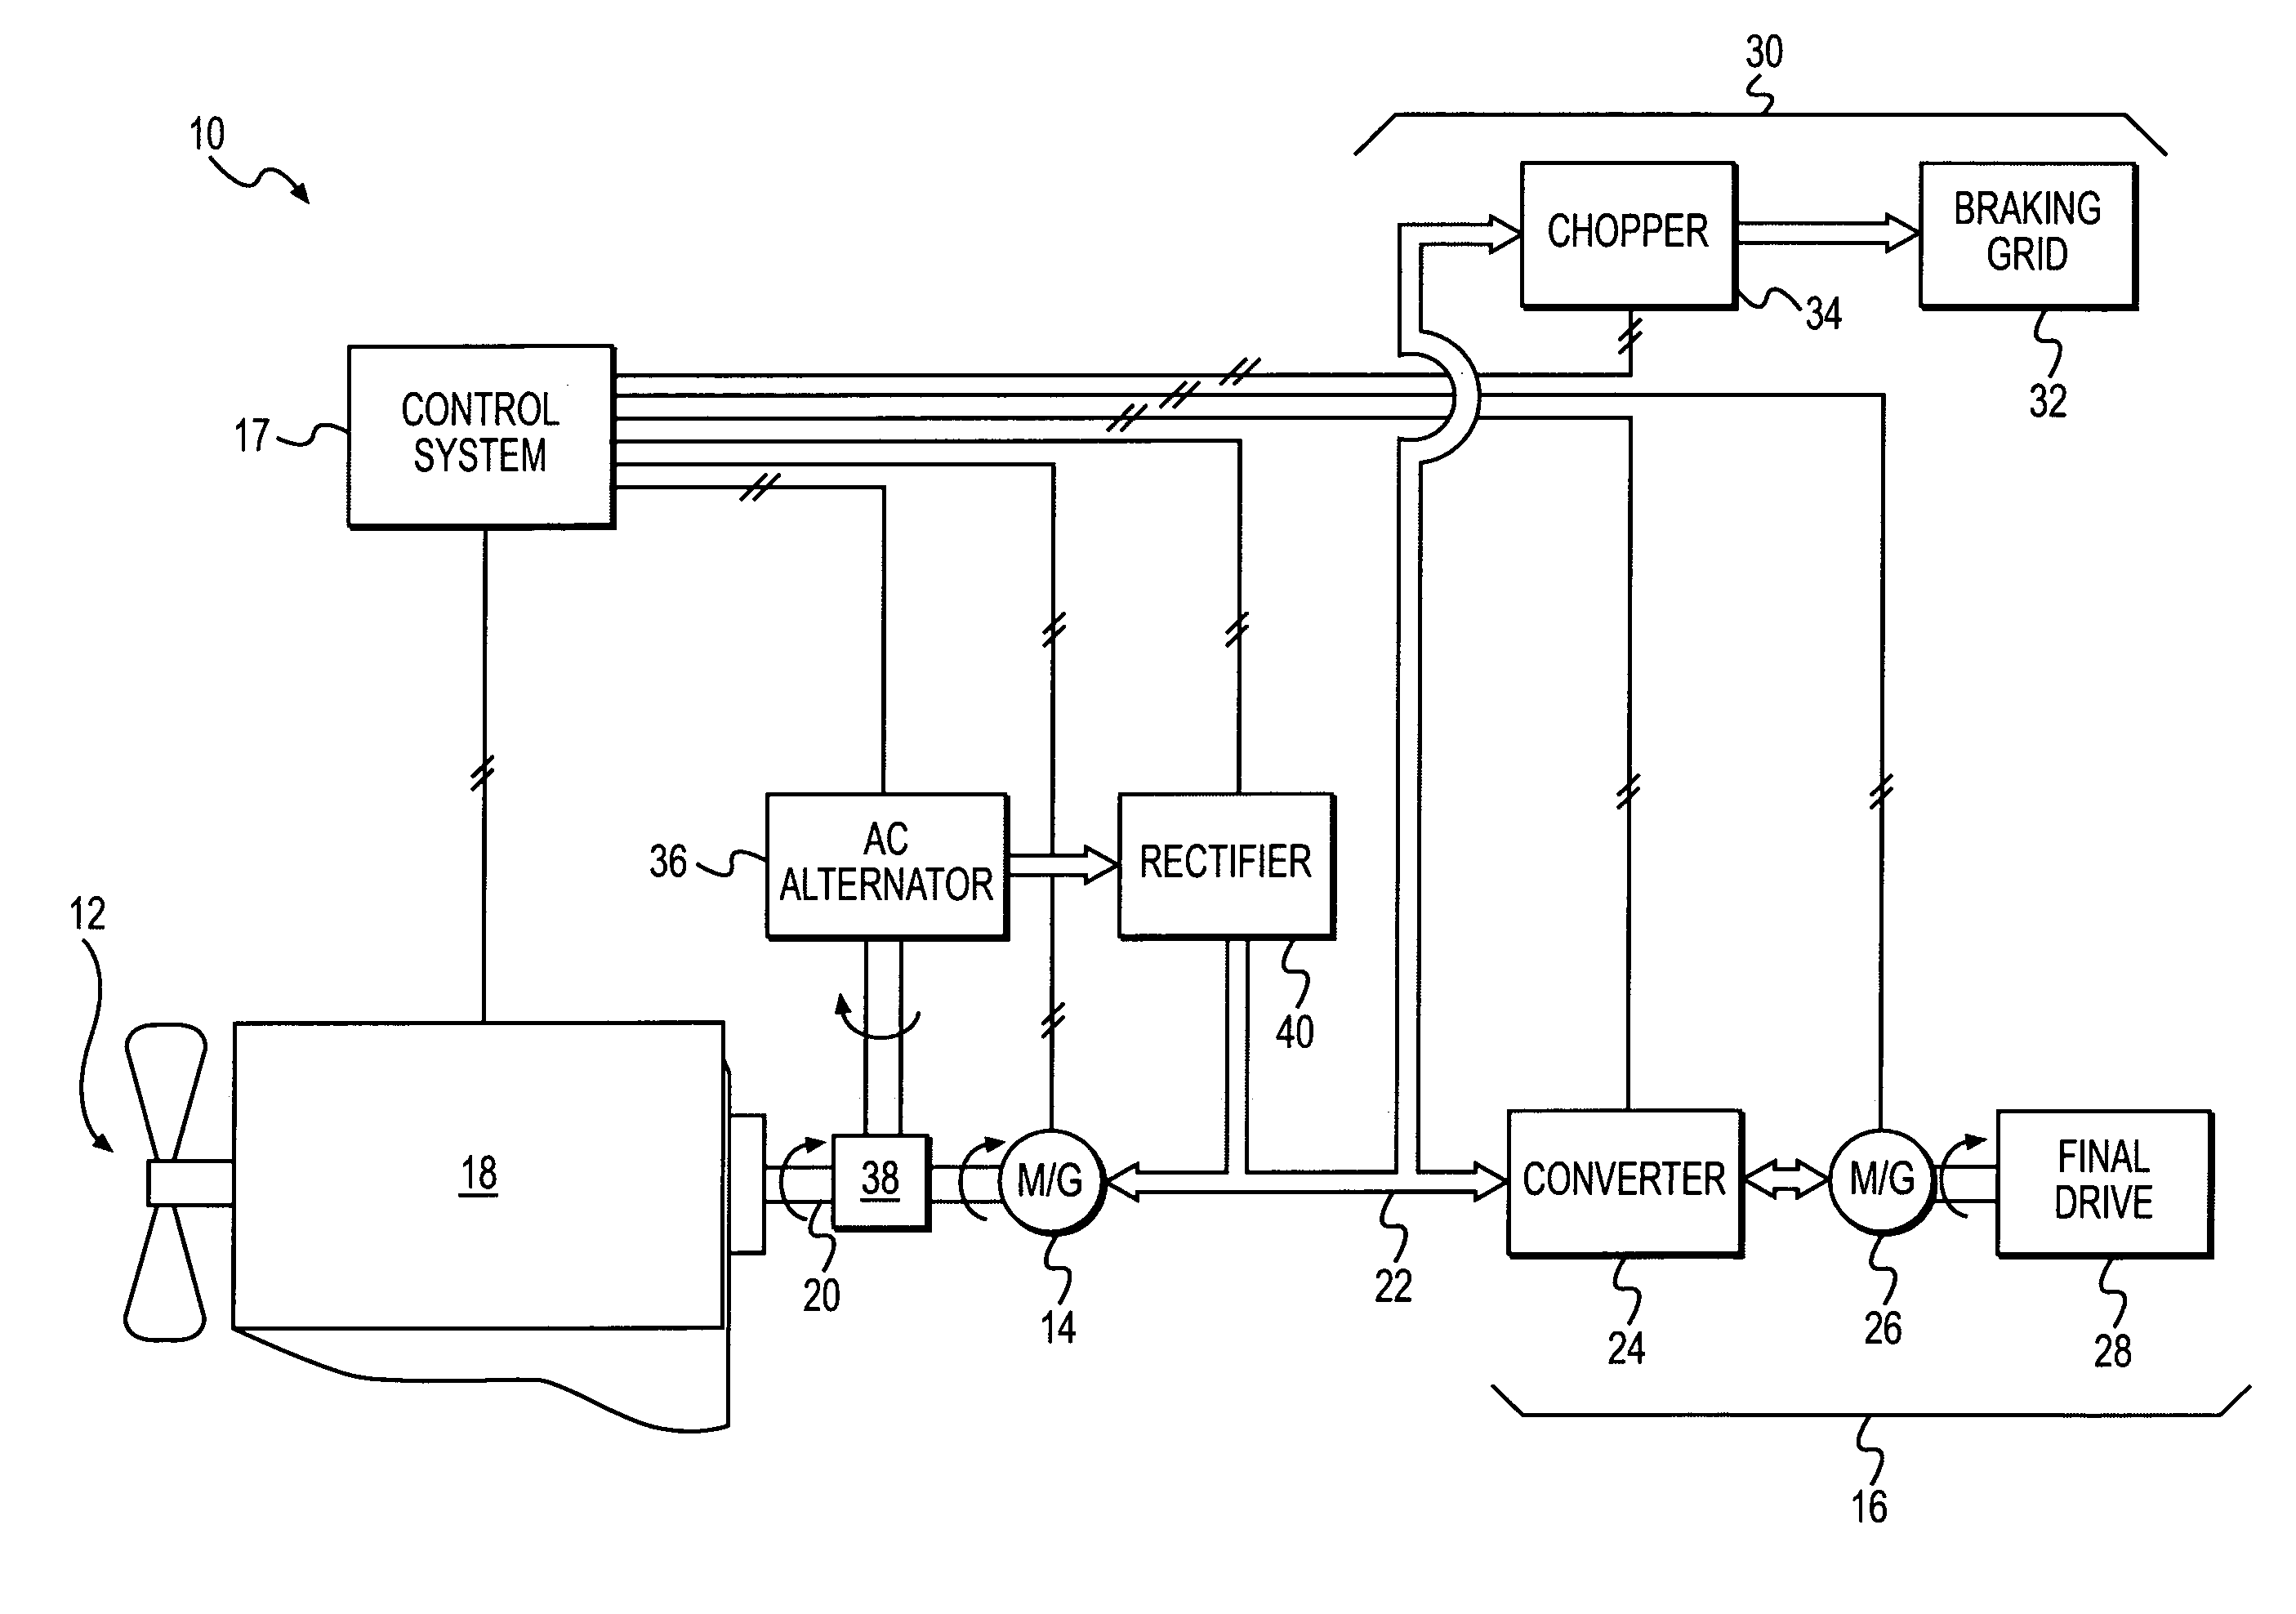 Electric powertrain system having bidirectional DC generator